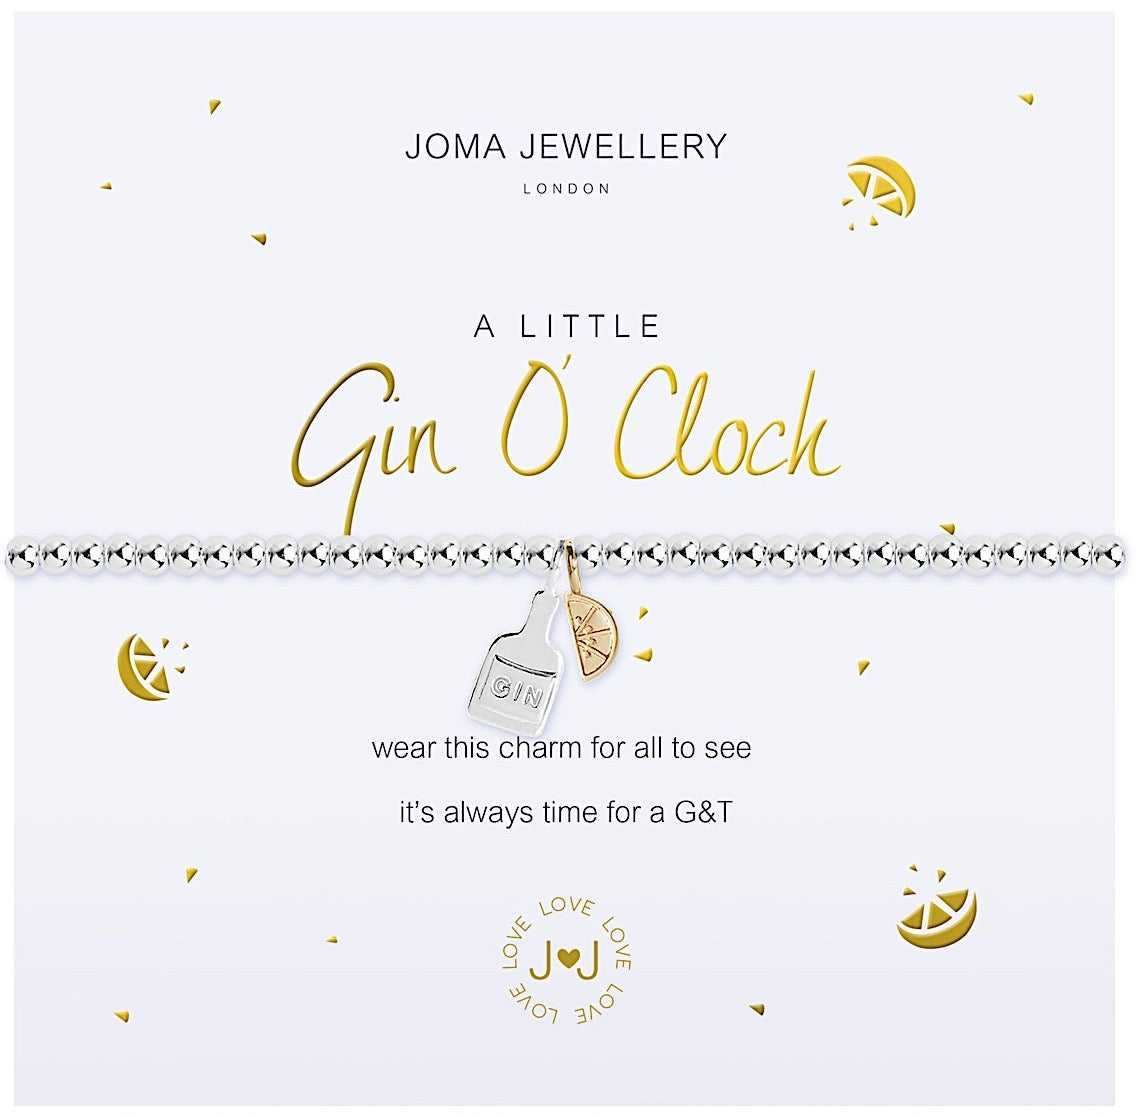 Joma Jewellery a little Gin O' Clock Bracelet - bottle and lemon